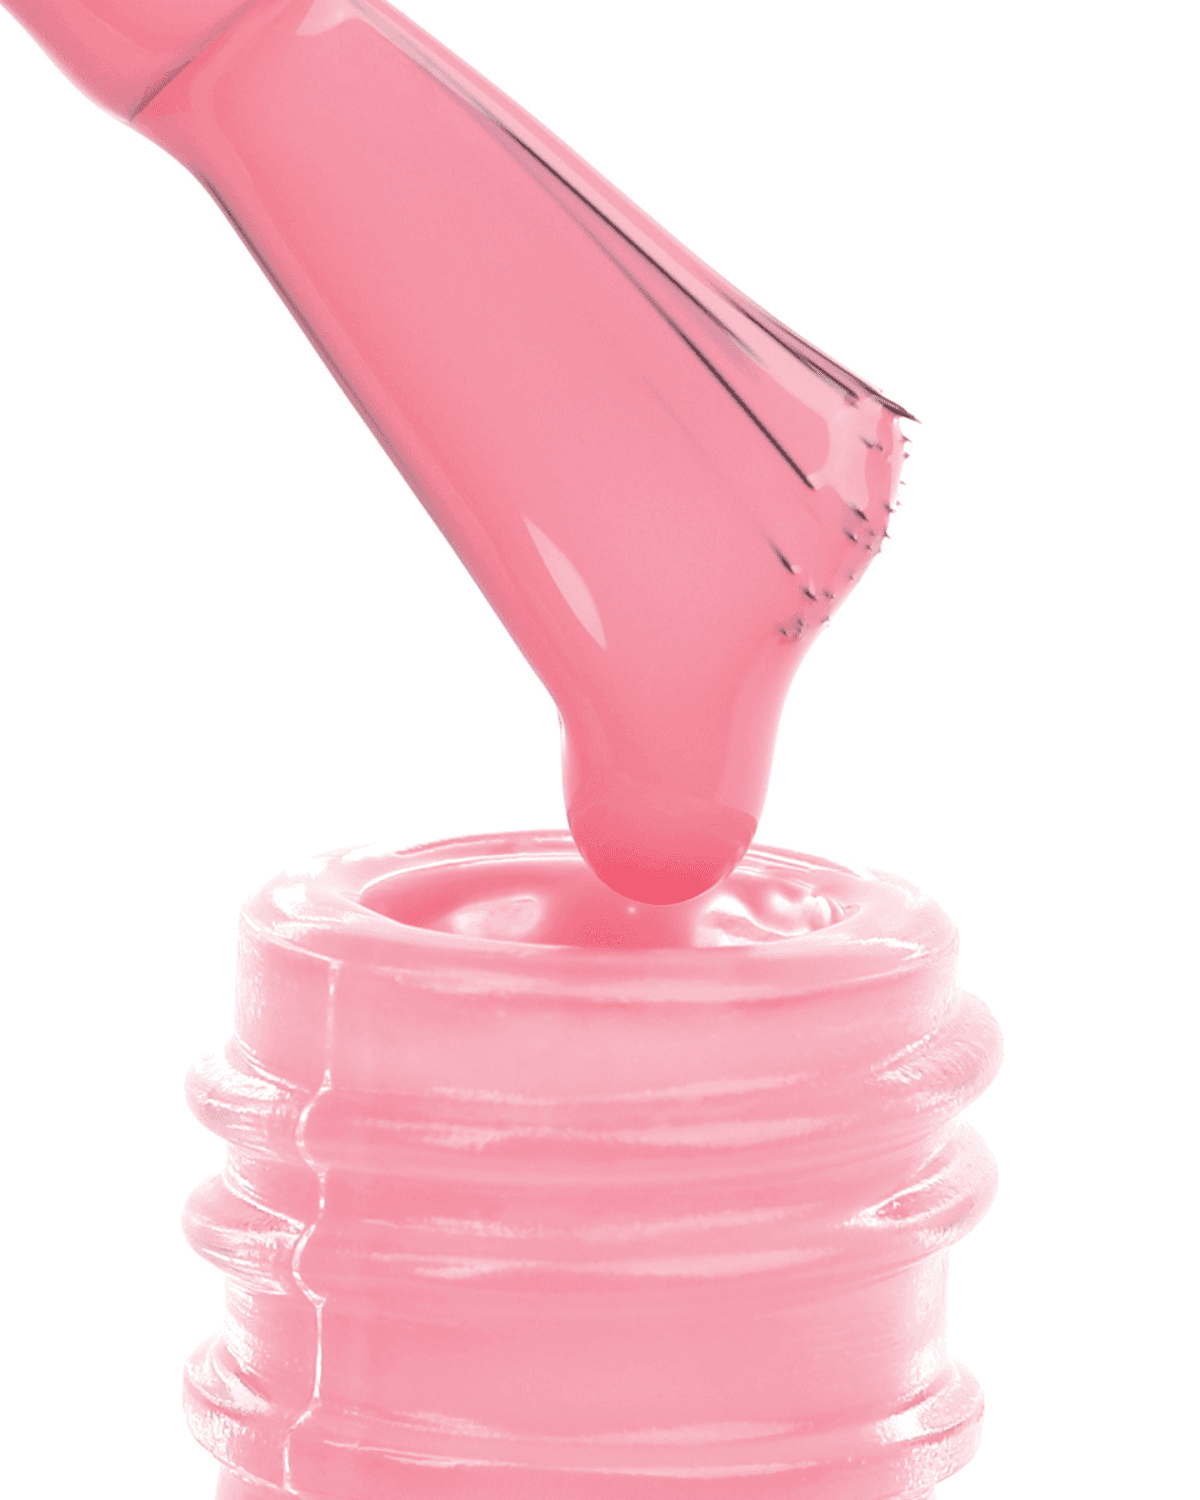 Selected image for E.MI Lak za nokte sa efektom gela Barbie Style #086 9ml roze